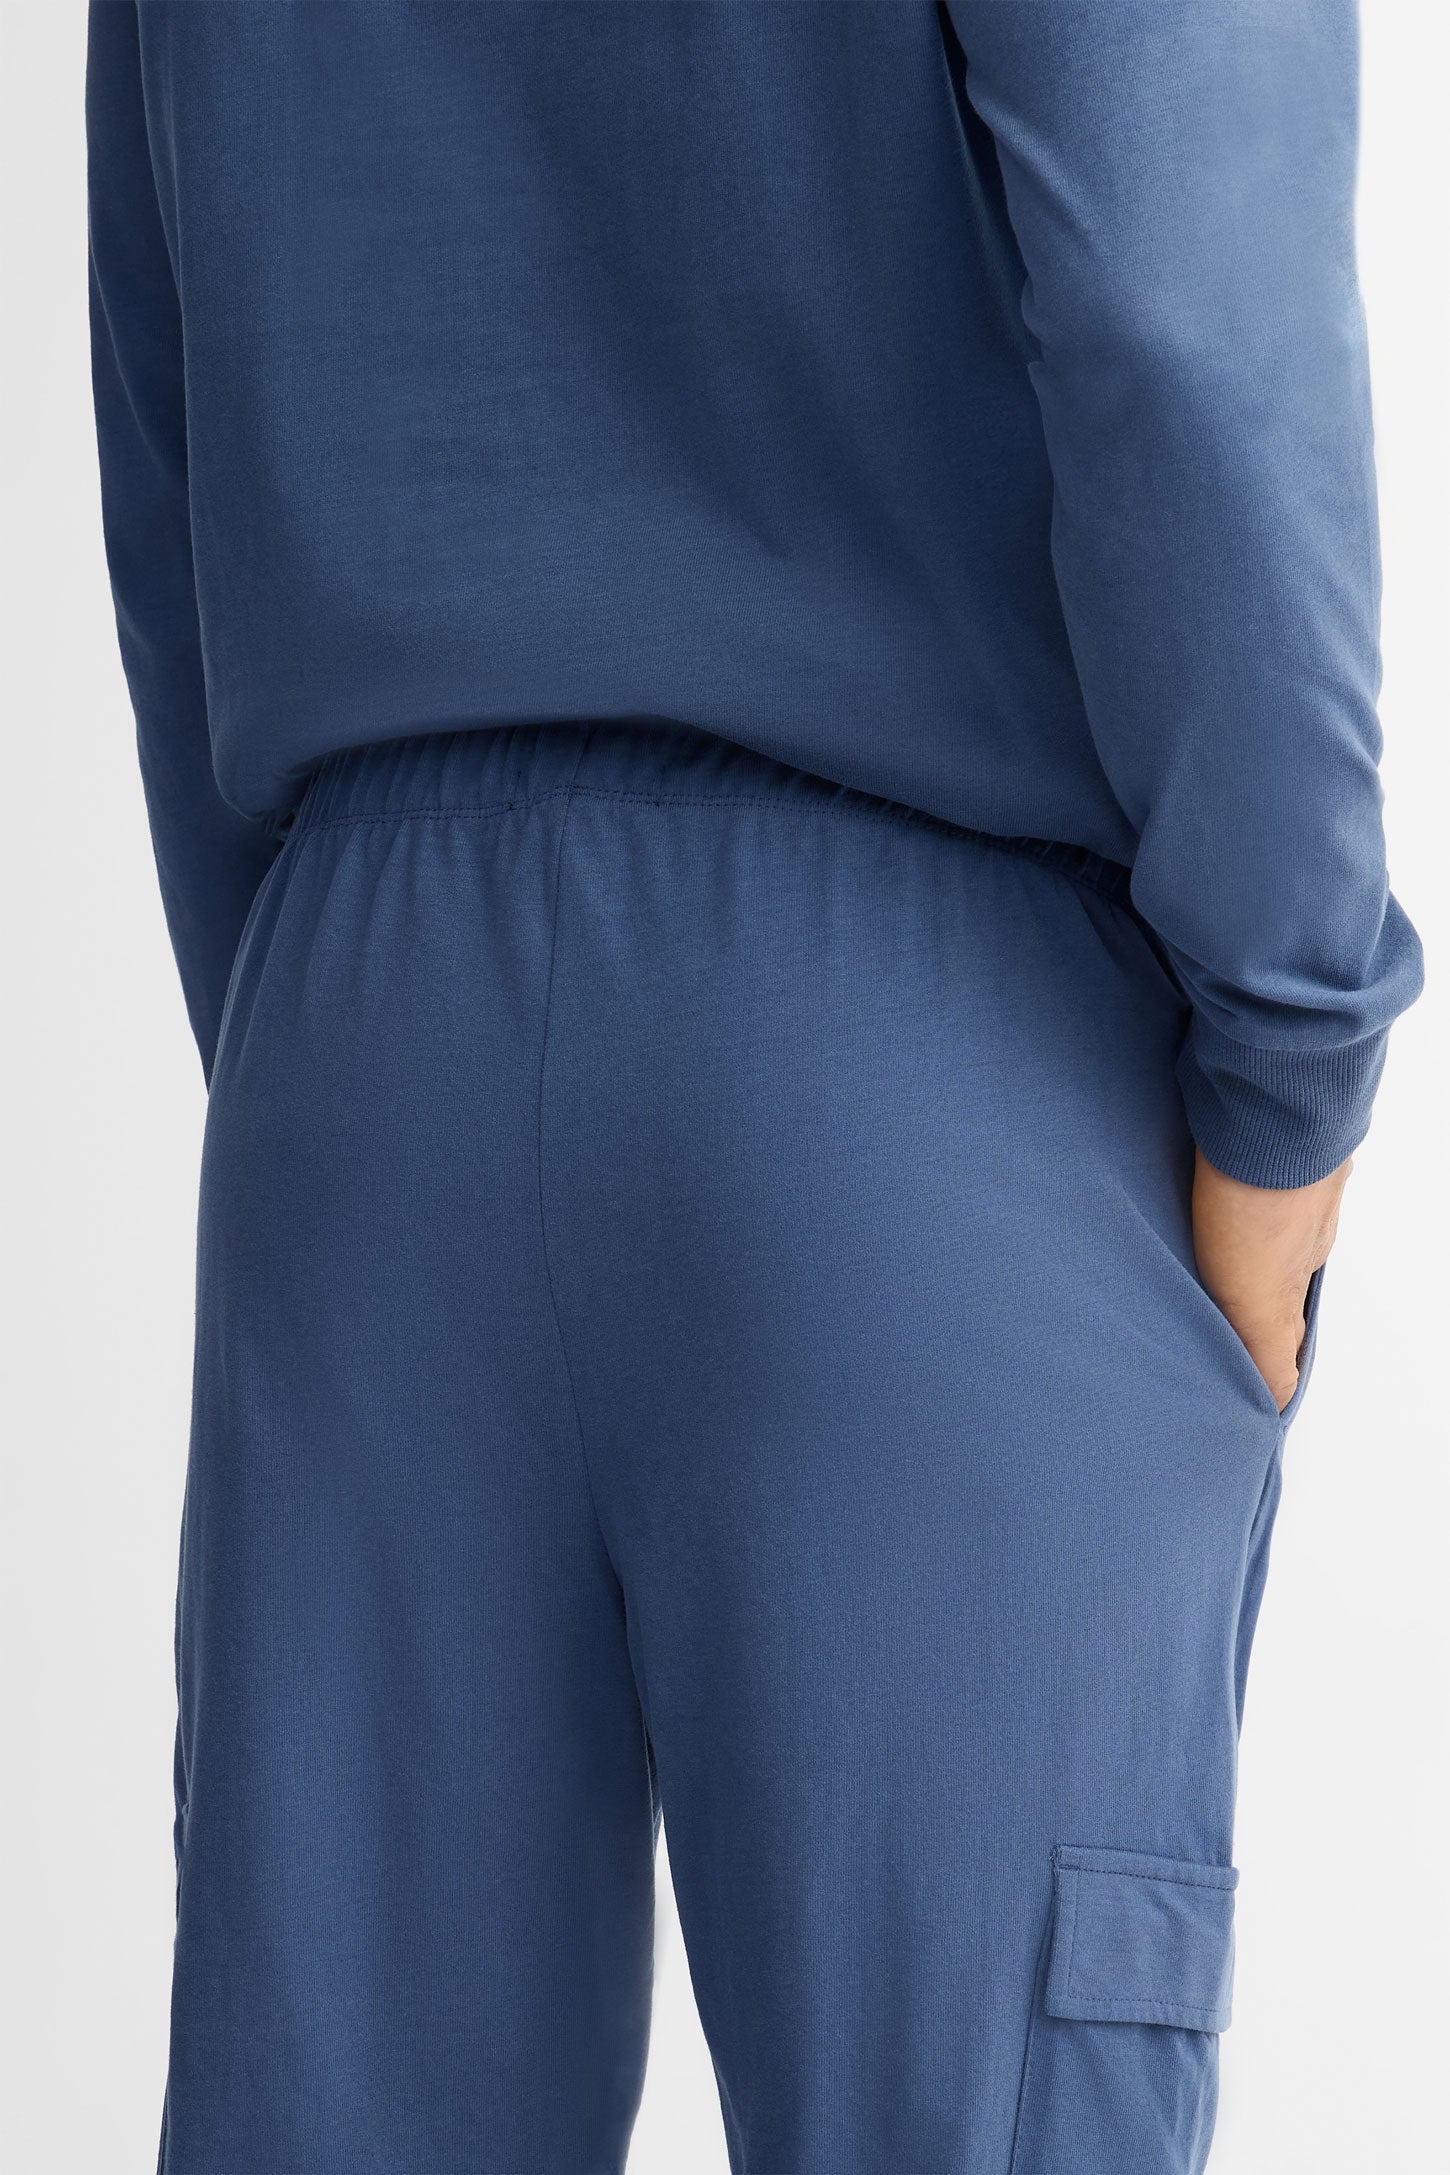 Essential Elements 3 Pack: Women's 100% Cotton Lounge Sleep Casual Pajama  Bottom Jogger Sweatpants (XX-Large, Set C) at Amazon Women's Clothing store